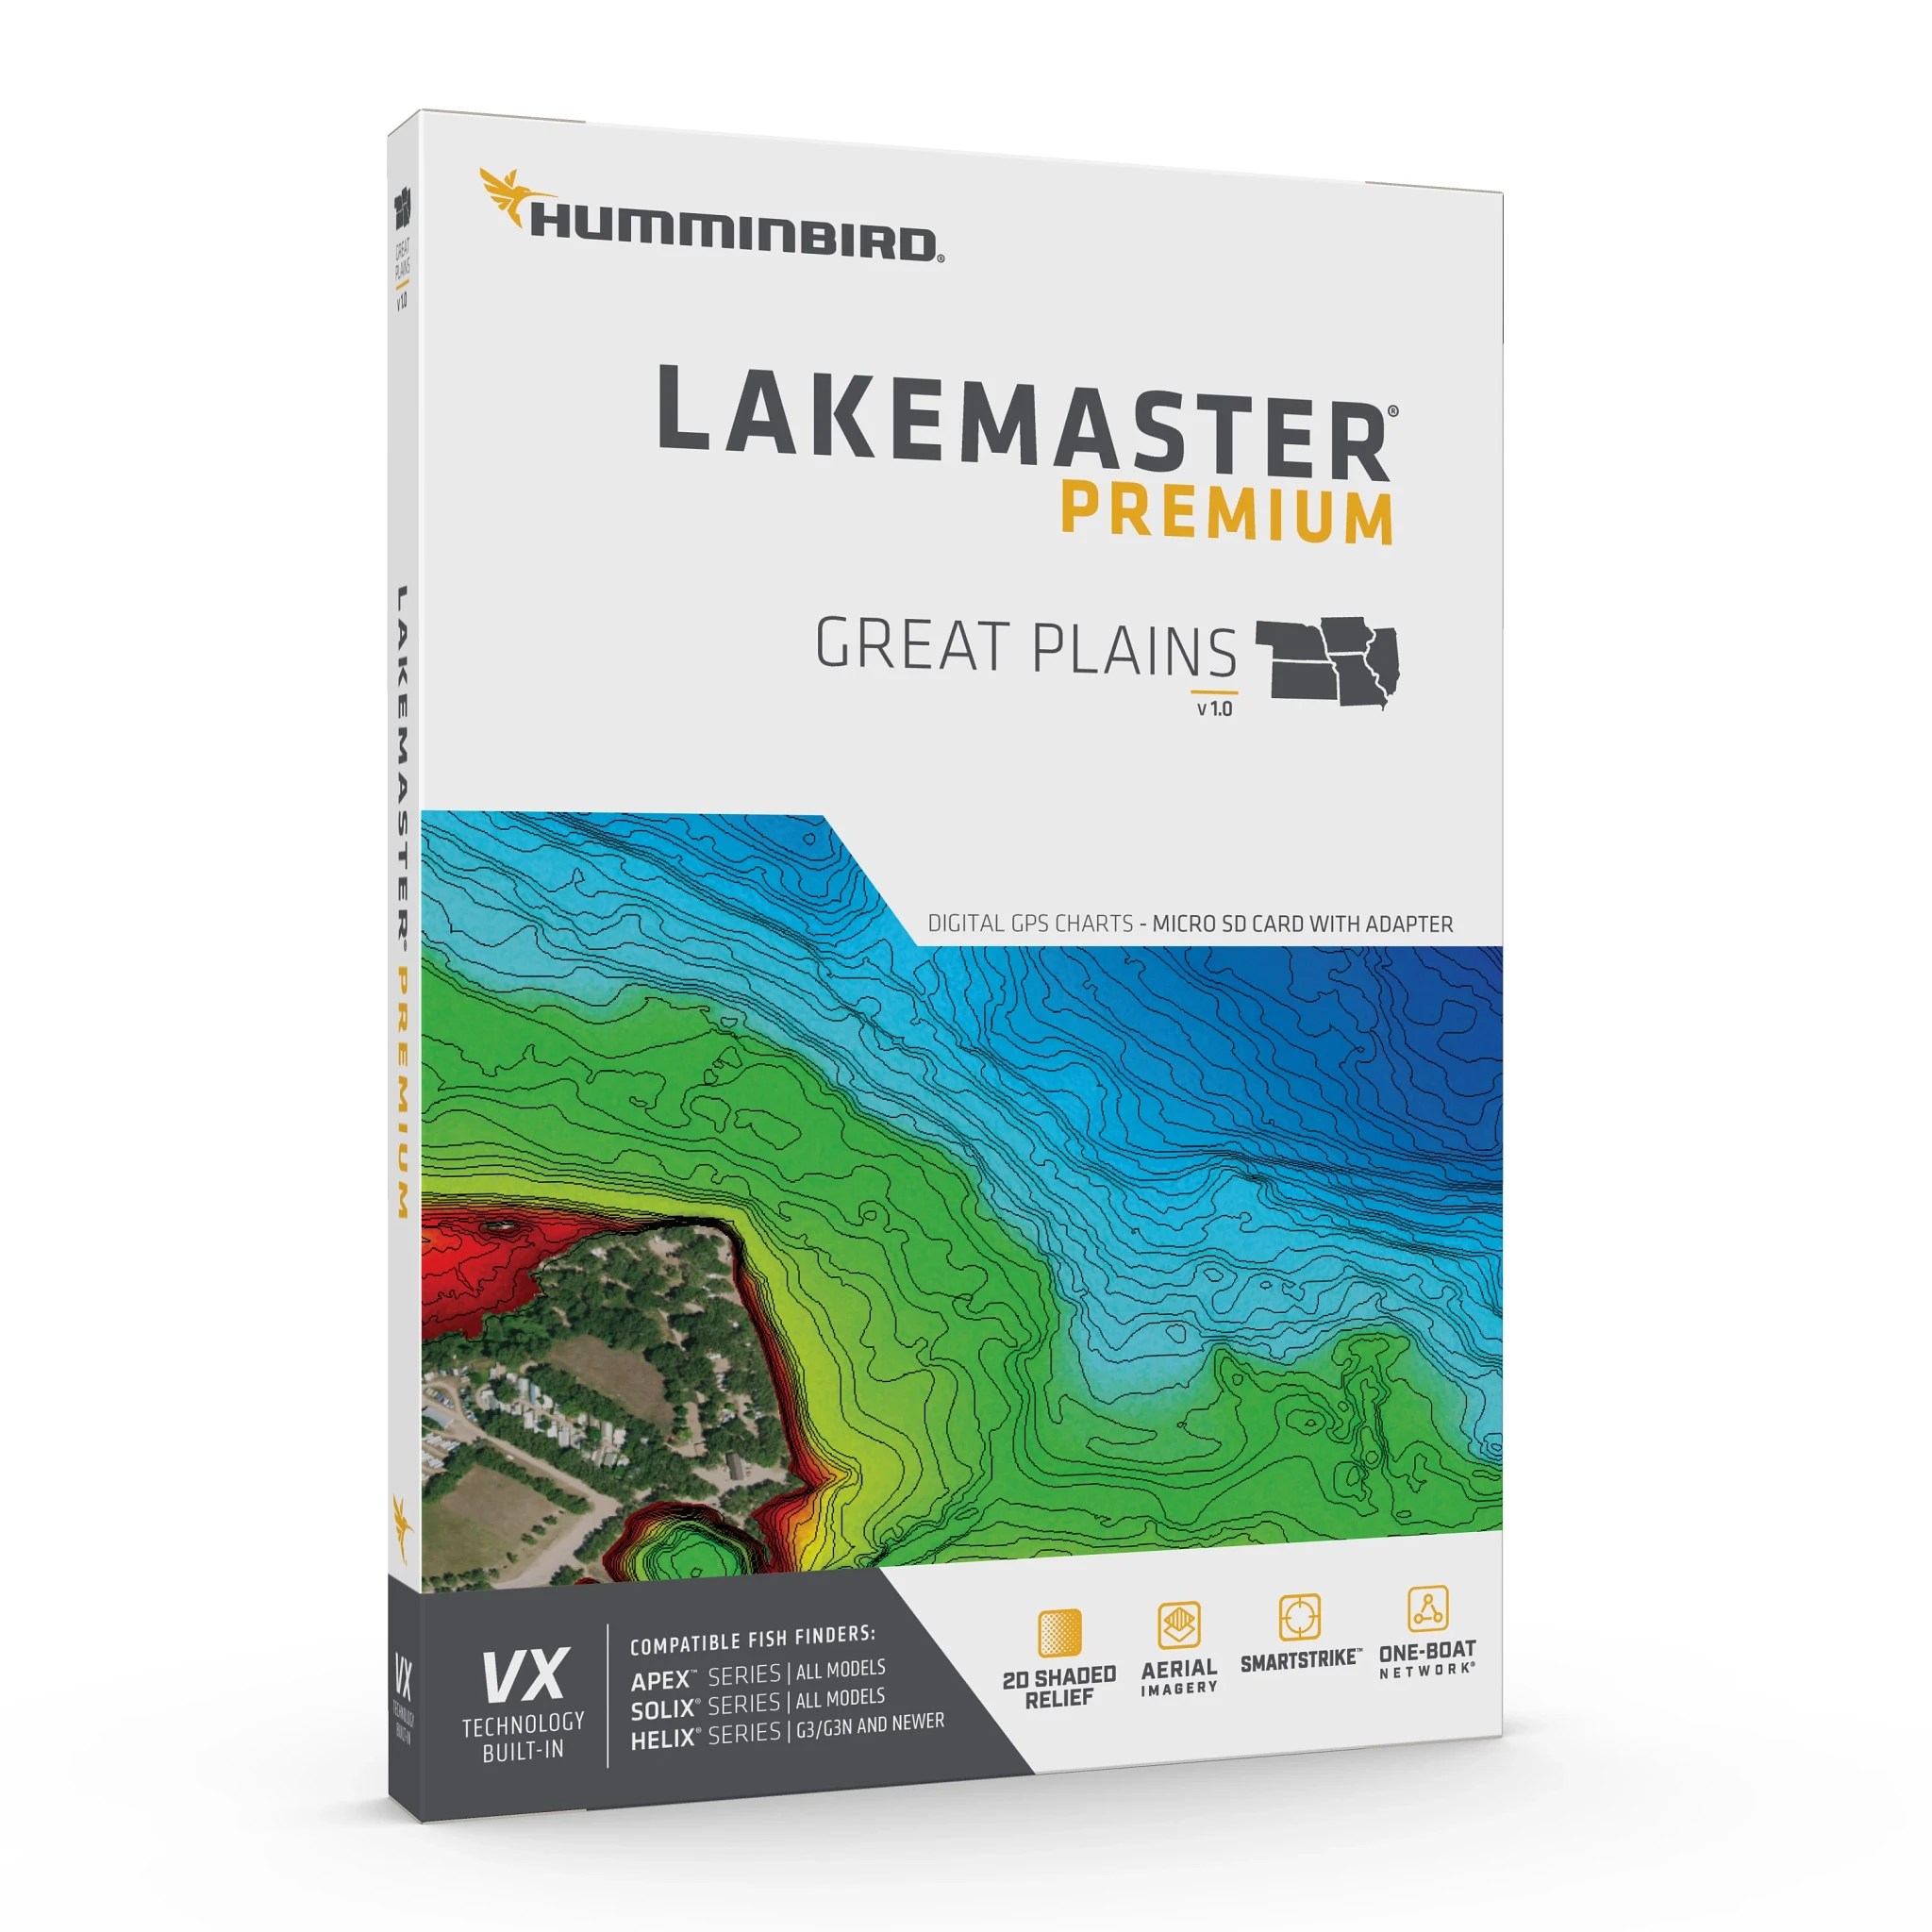 LakeMaster Premium - Great Plains Packaging